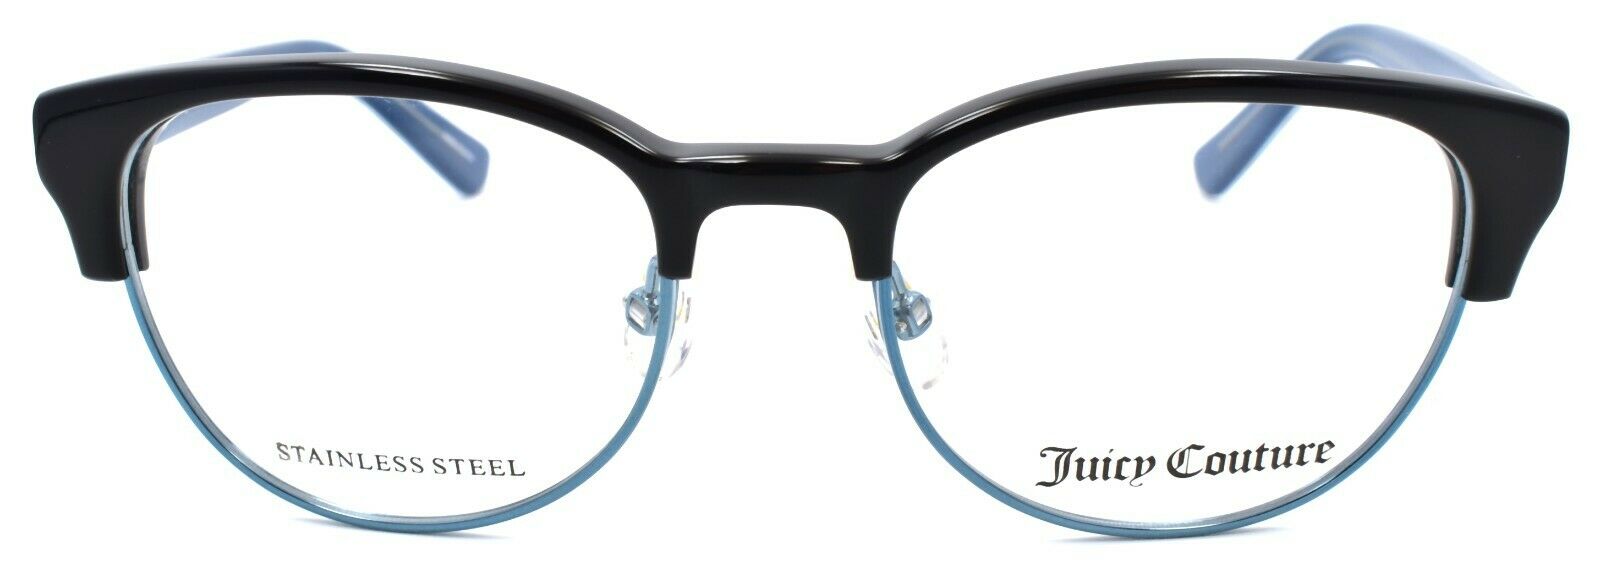 2-Juicy Couture JU928 ETJ Girls Eyeglasses Frames 45-16-120 Black / Teal w/ Hearts-762753165688-IKSpecs